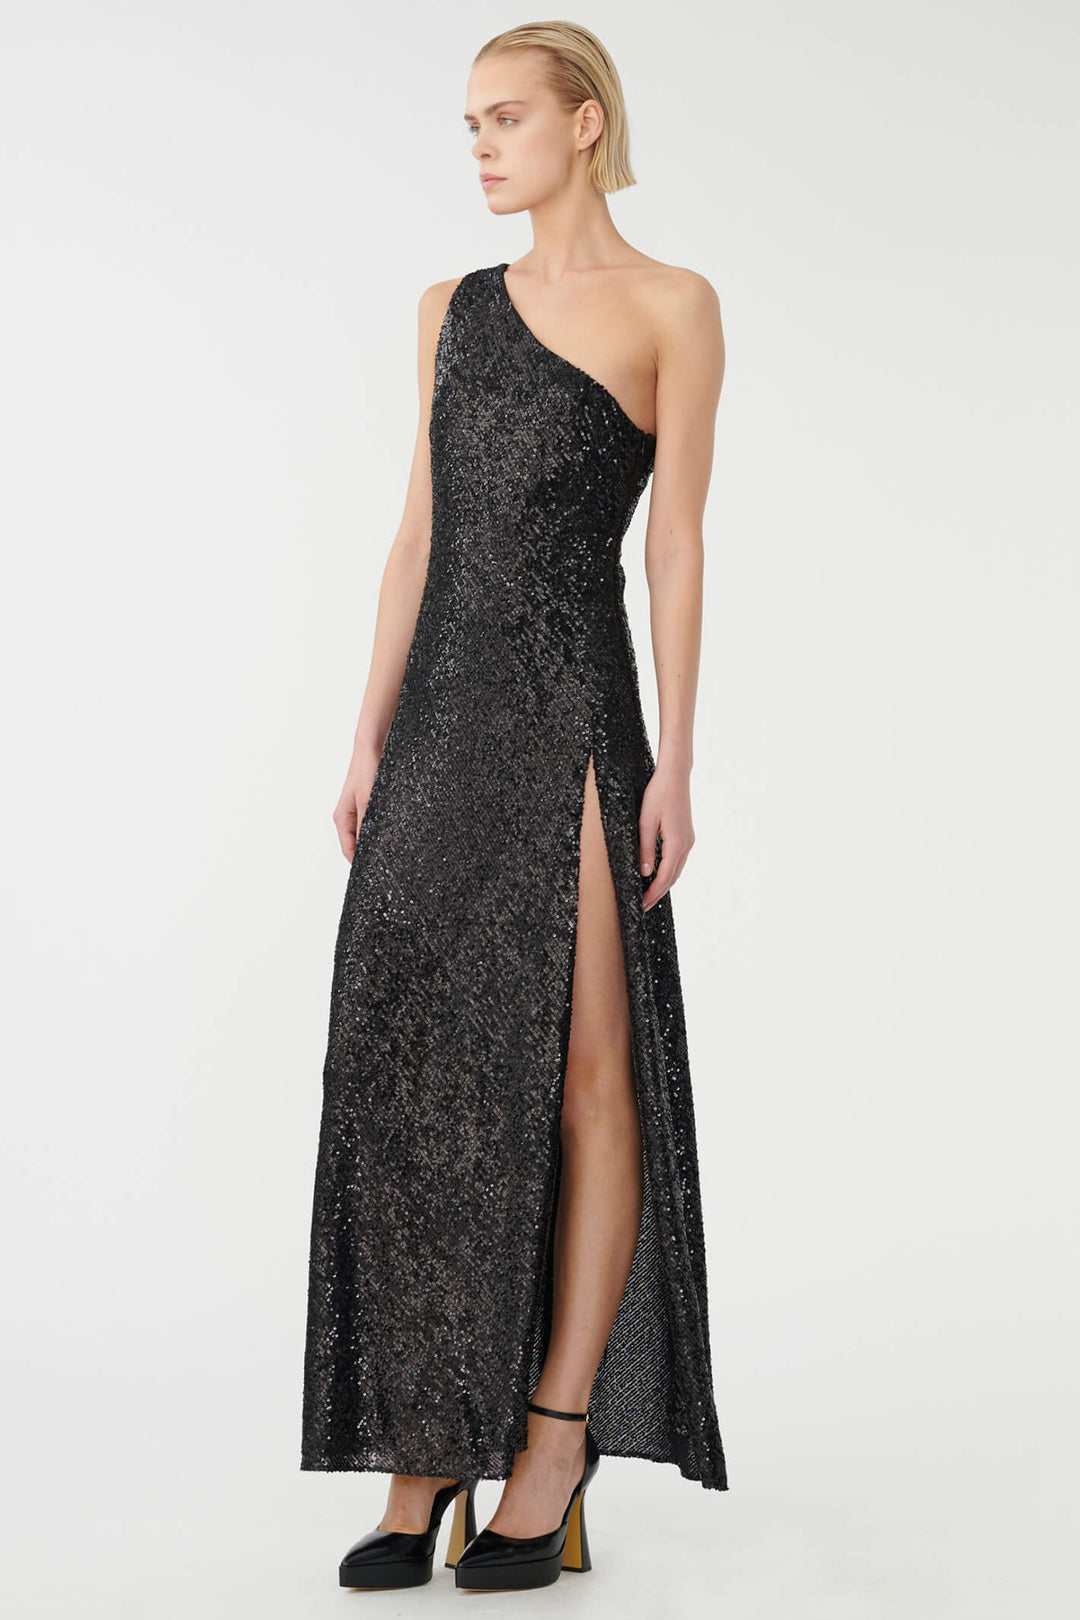 Dea Kudibal Minello 1551023 Black One Shoulder Sequin Evening Dress - Olivia Grace Fashion